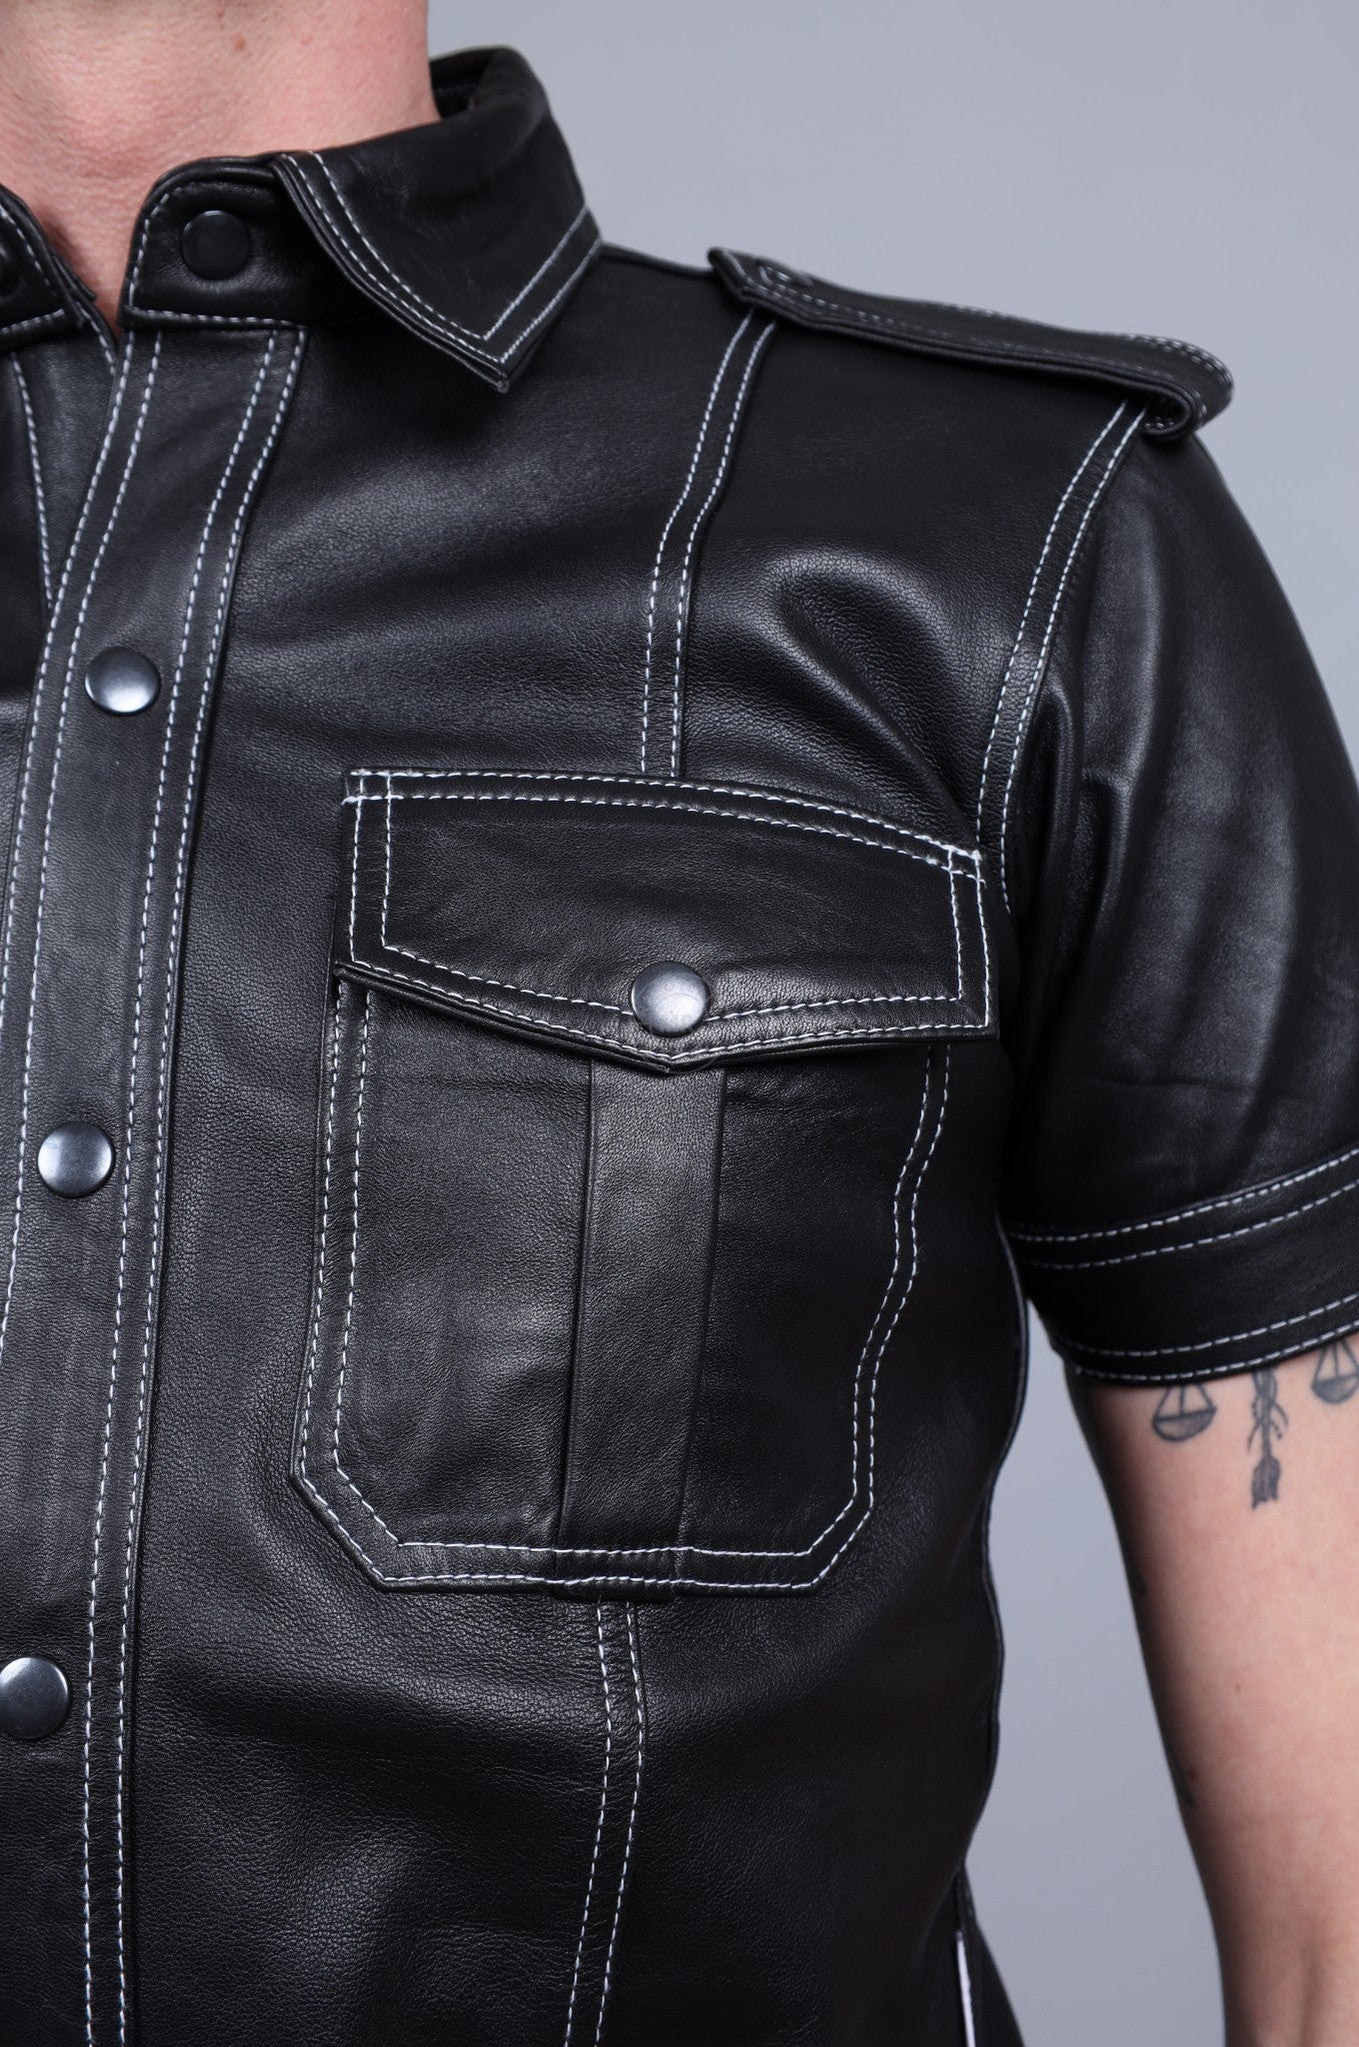 Black Leather Shirt - White Stitching at MR. Riegillio